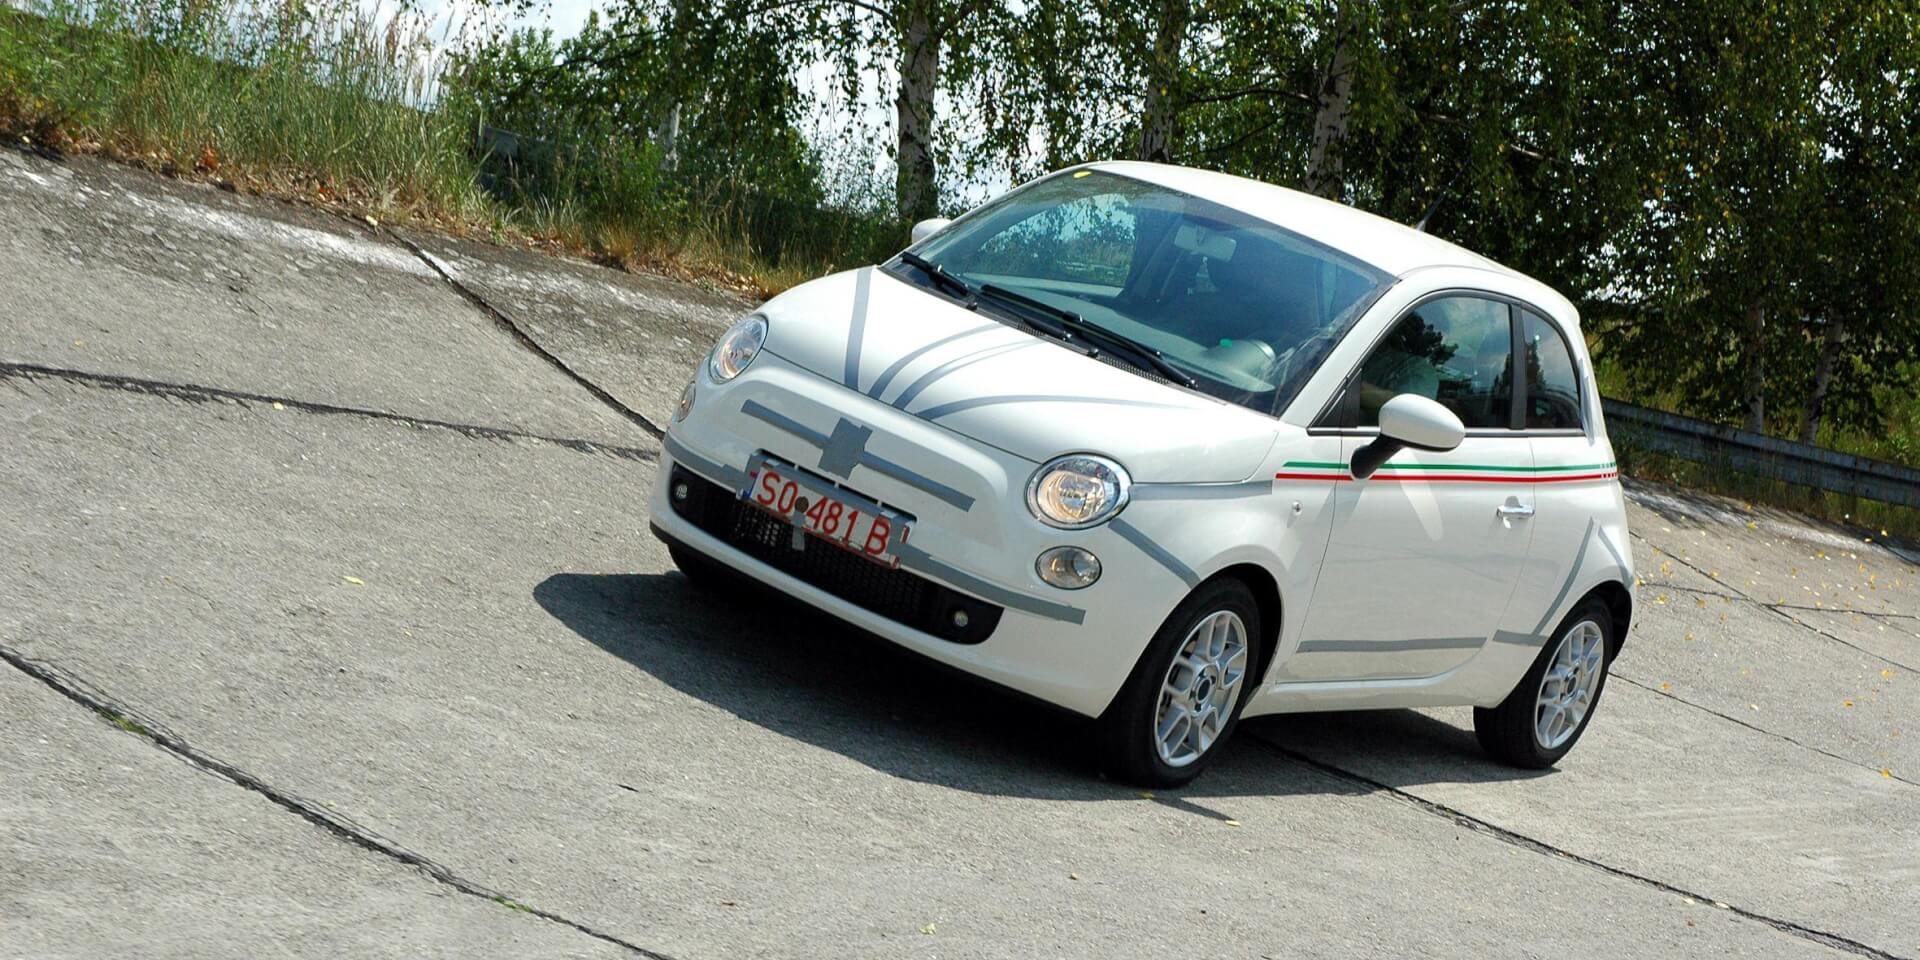 Rok 2007: Fiat Panda podczas prób na torzze